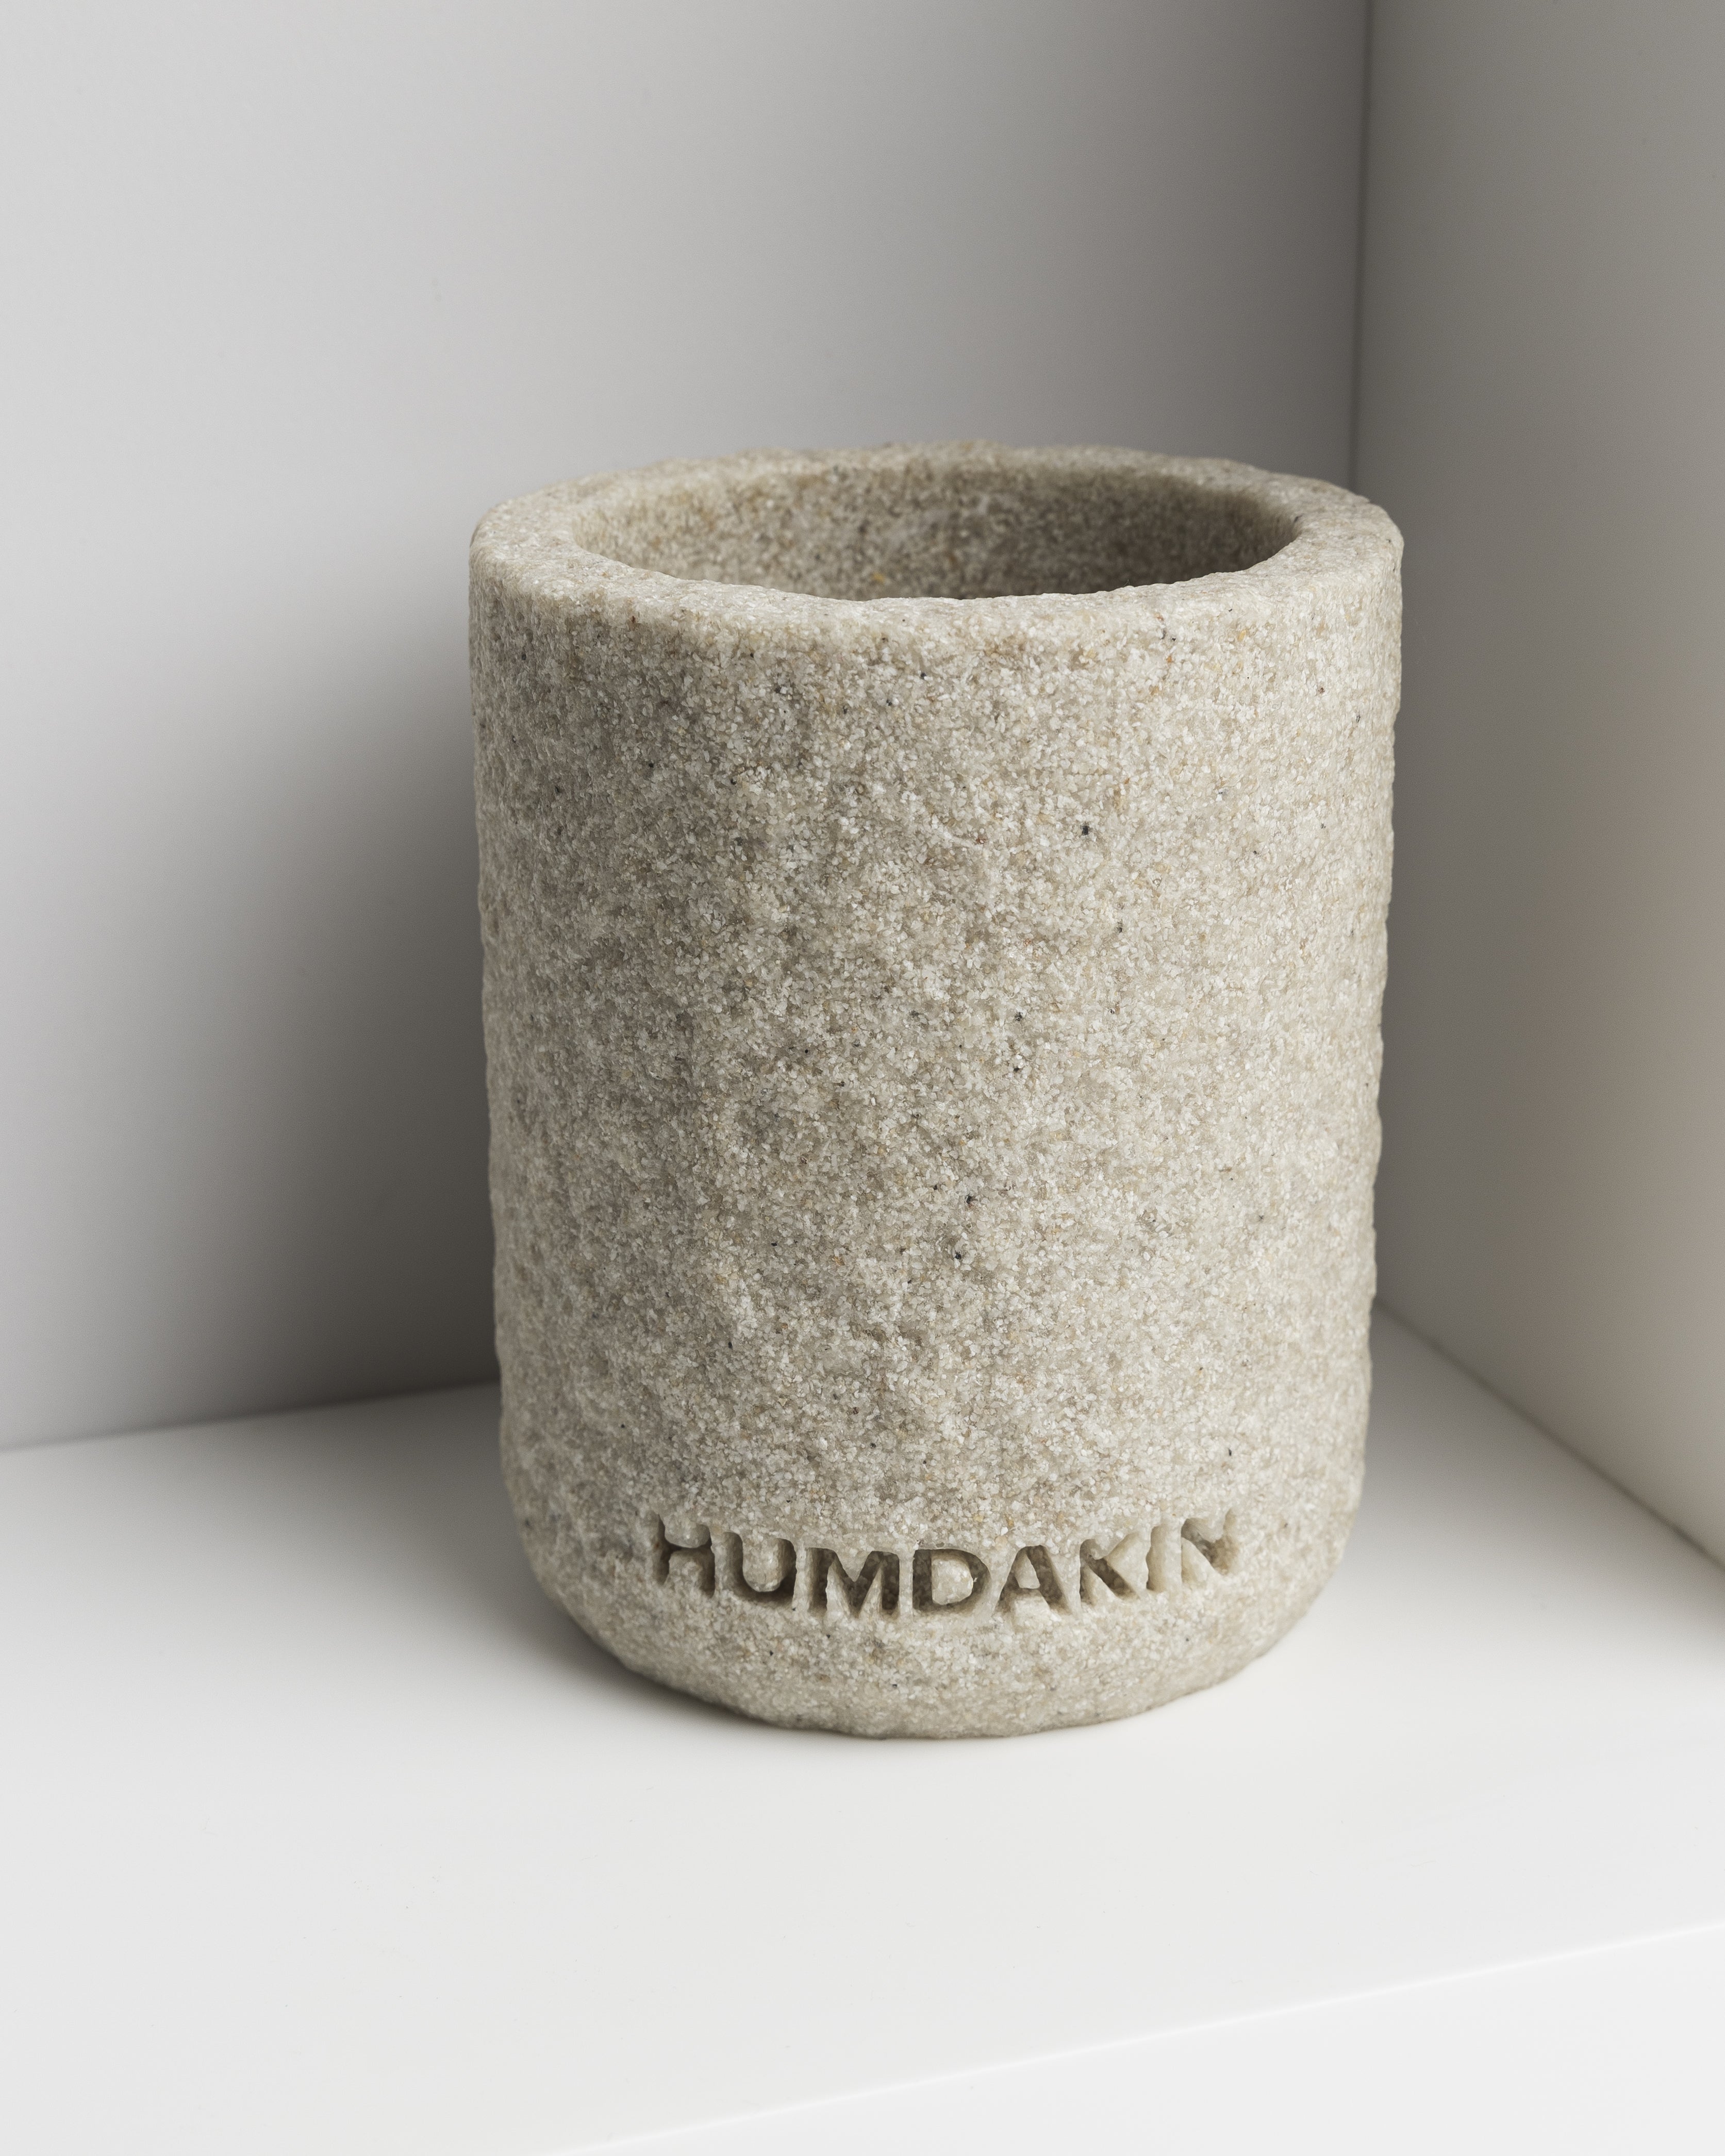 HUMDAKIN Sandstone Toothbrush Mug Sandstone 00 Neutral/No color